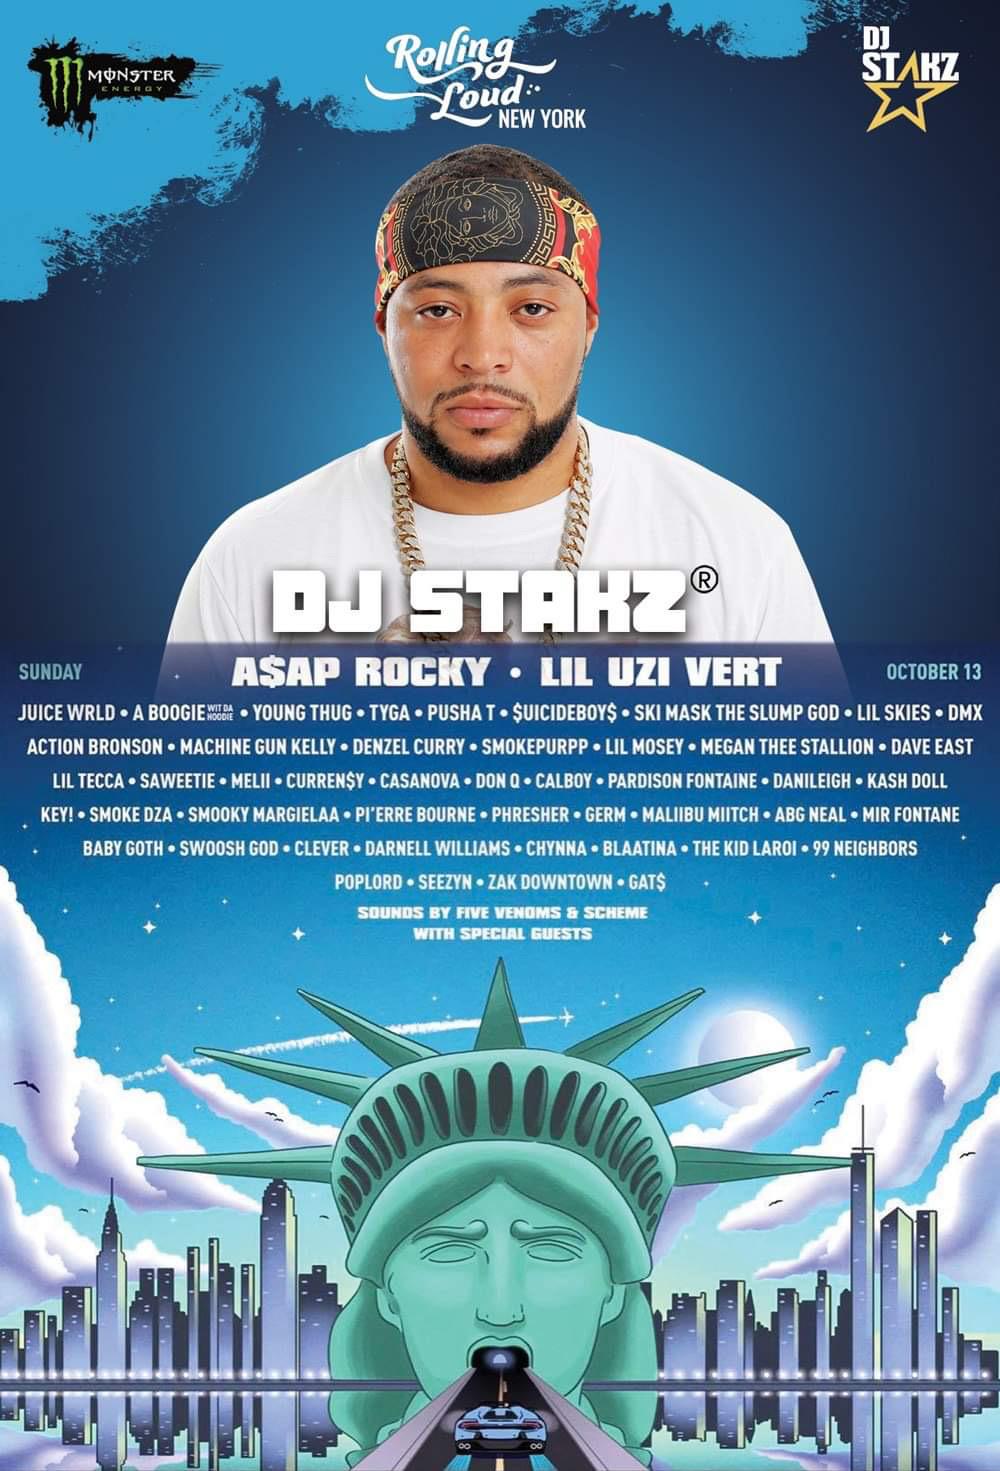 Rolling Loud NYC 2019 - DJ Stakz.jpg